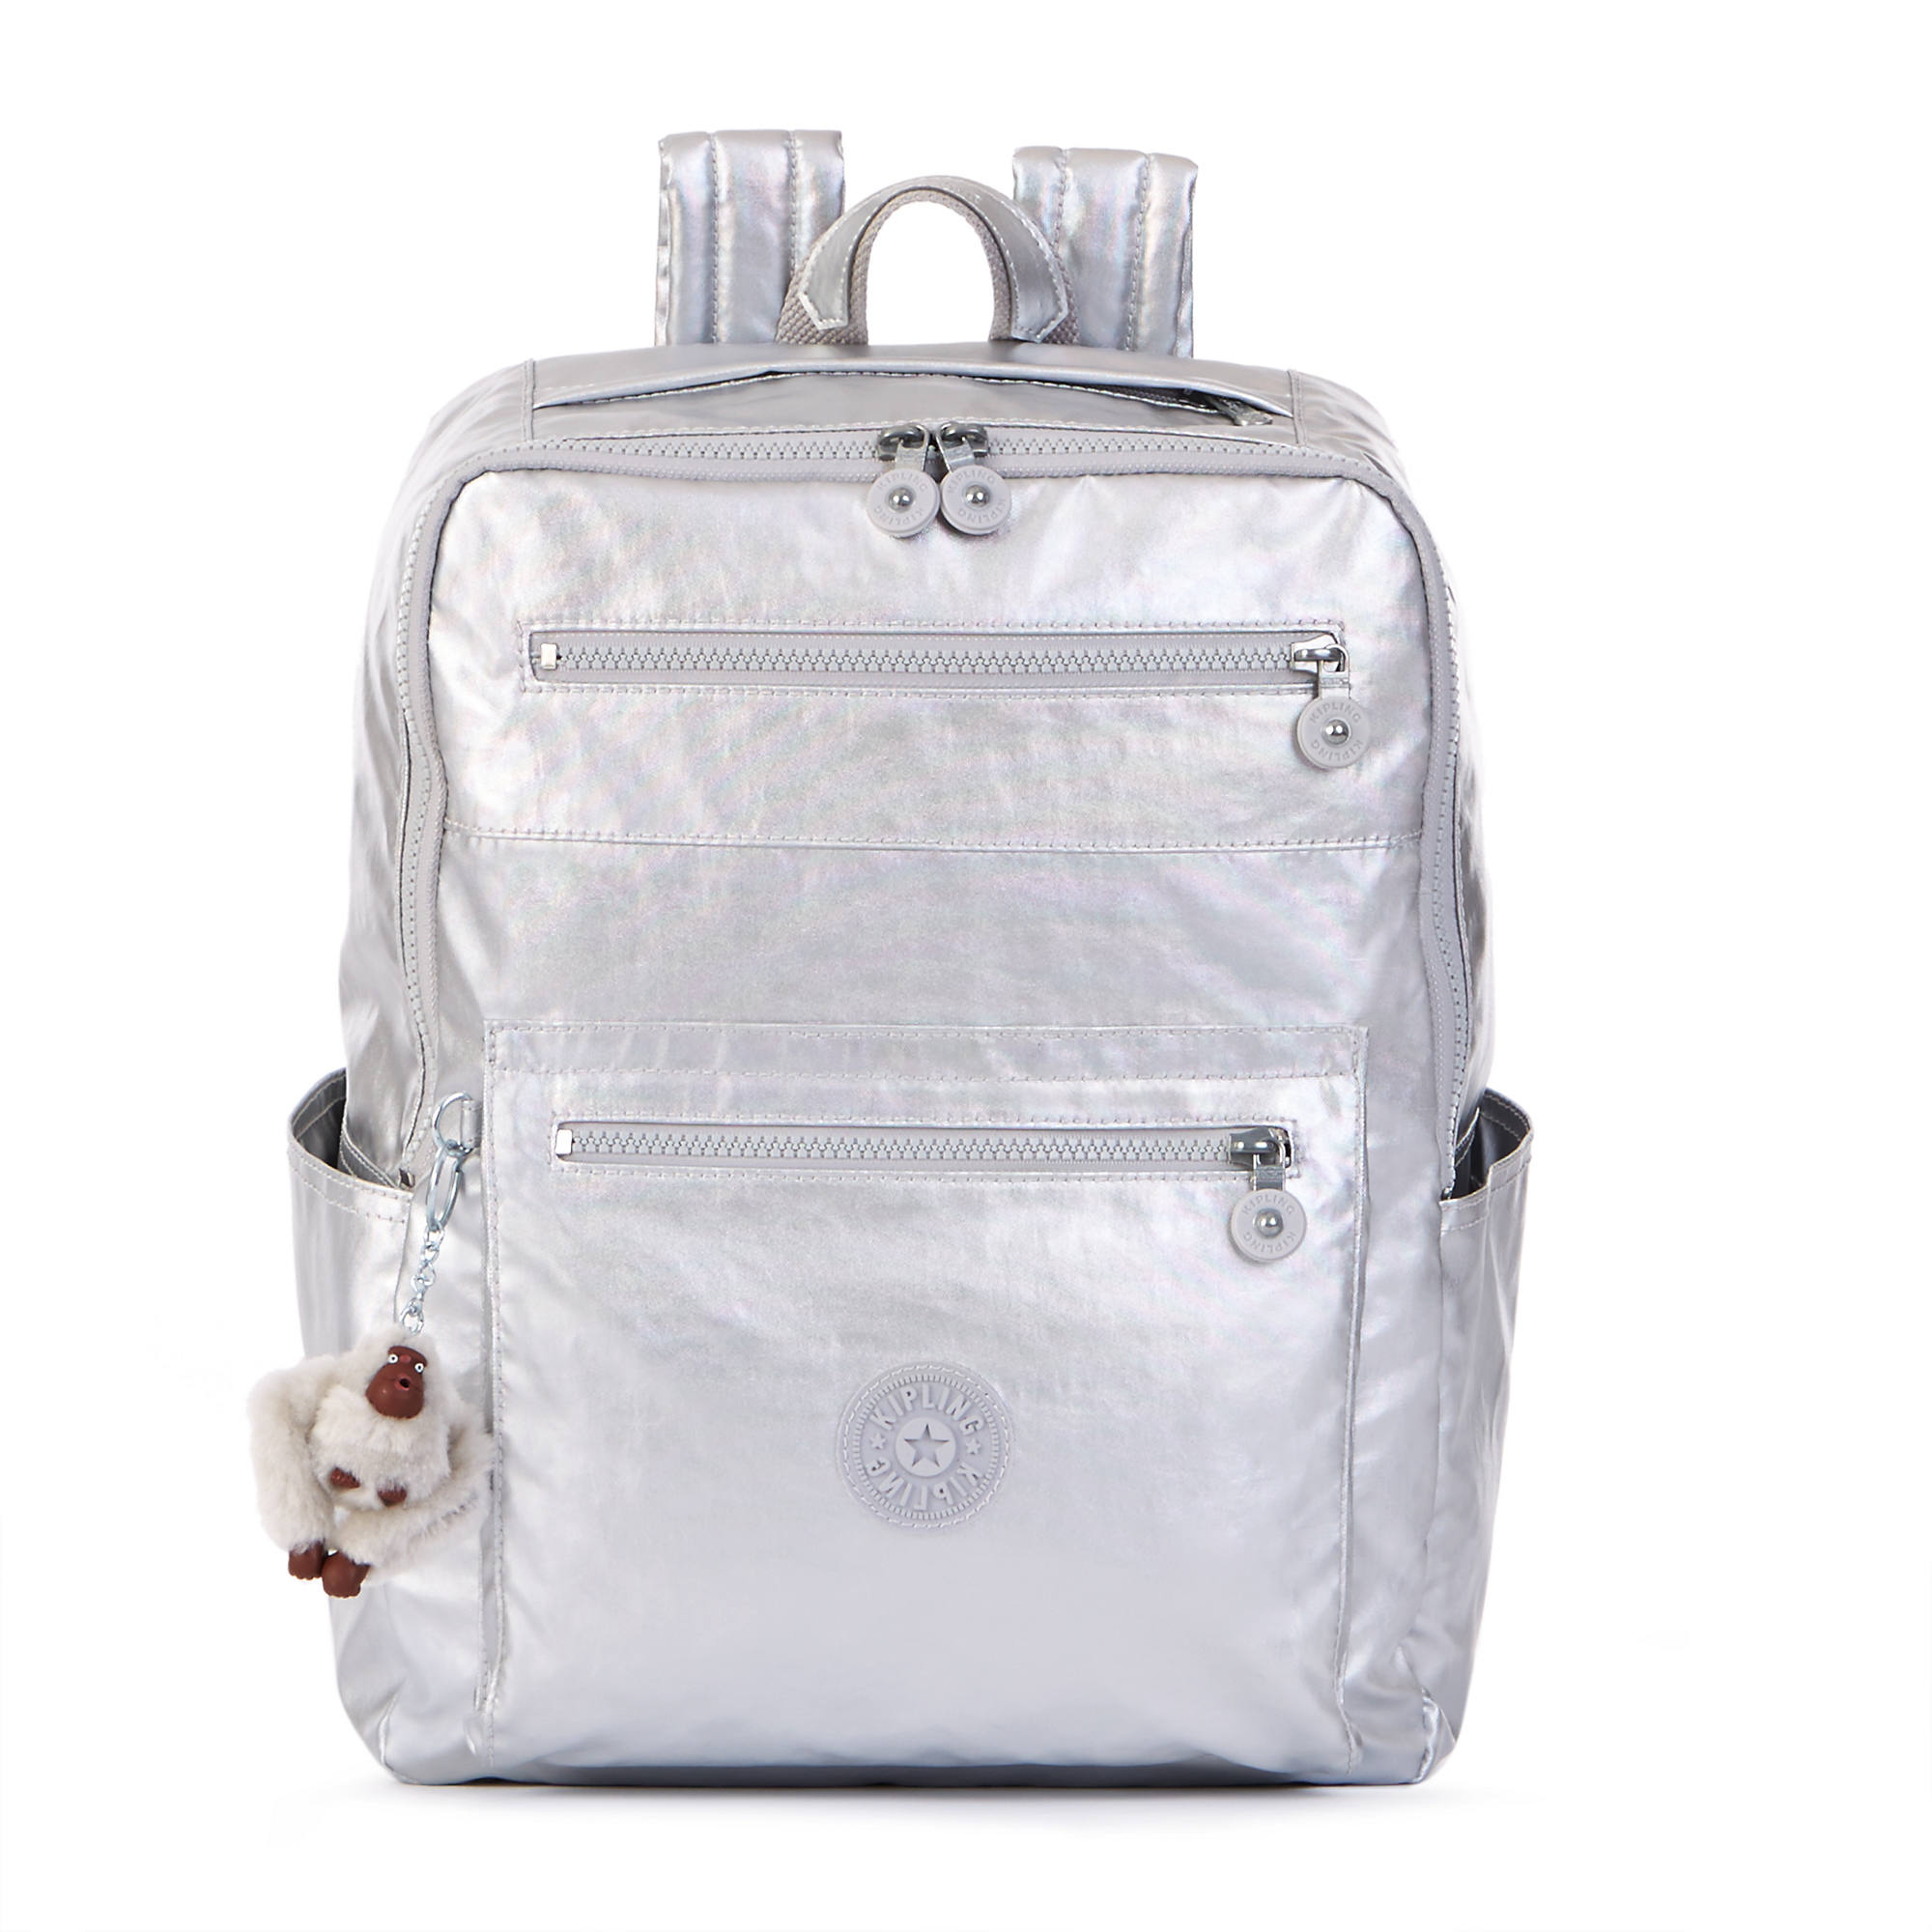 Kipling Curtis Medium Backpack | eBay